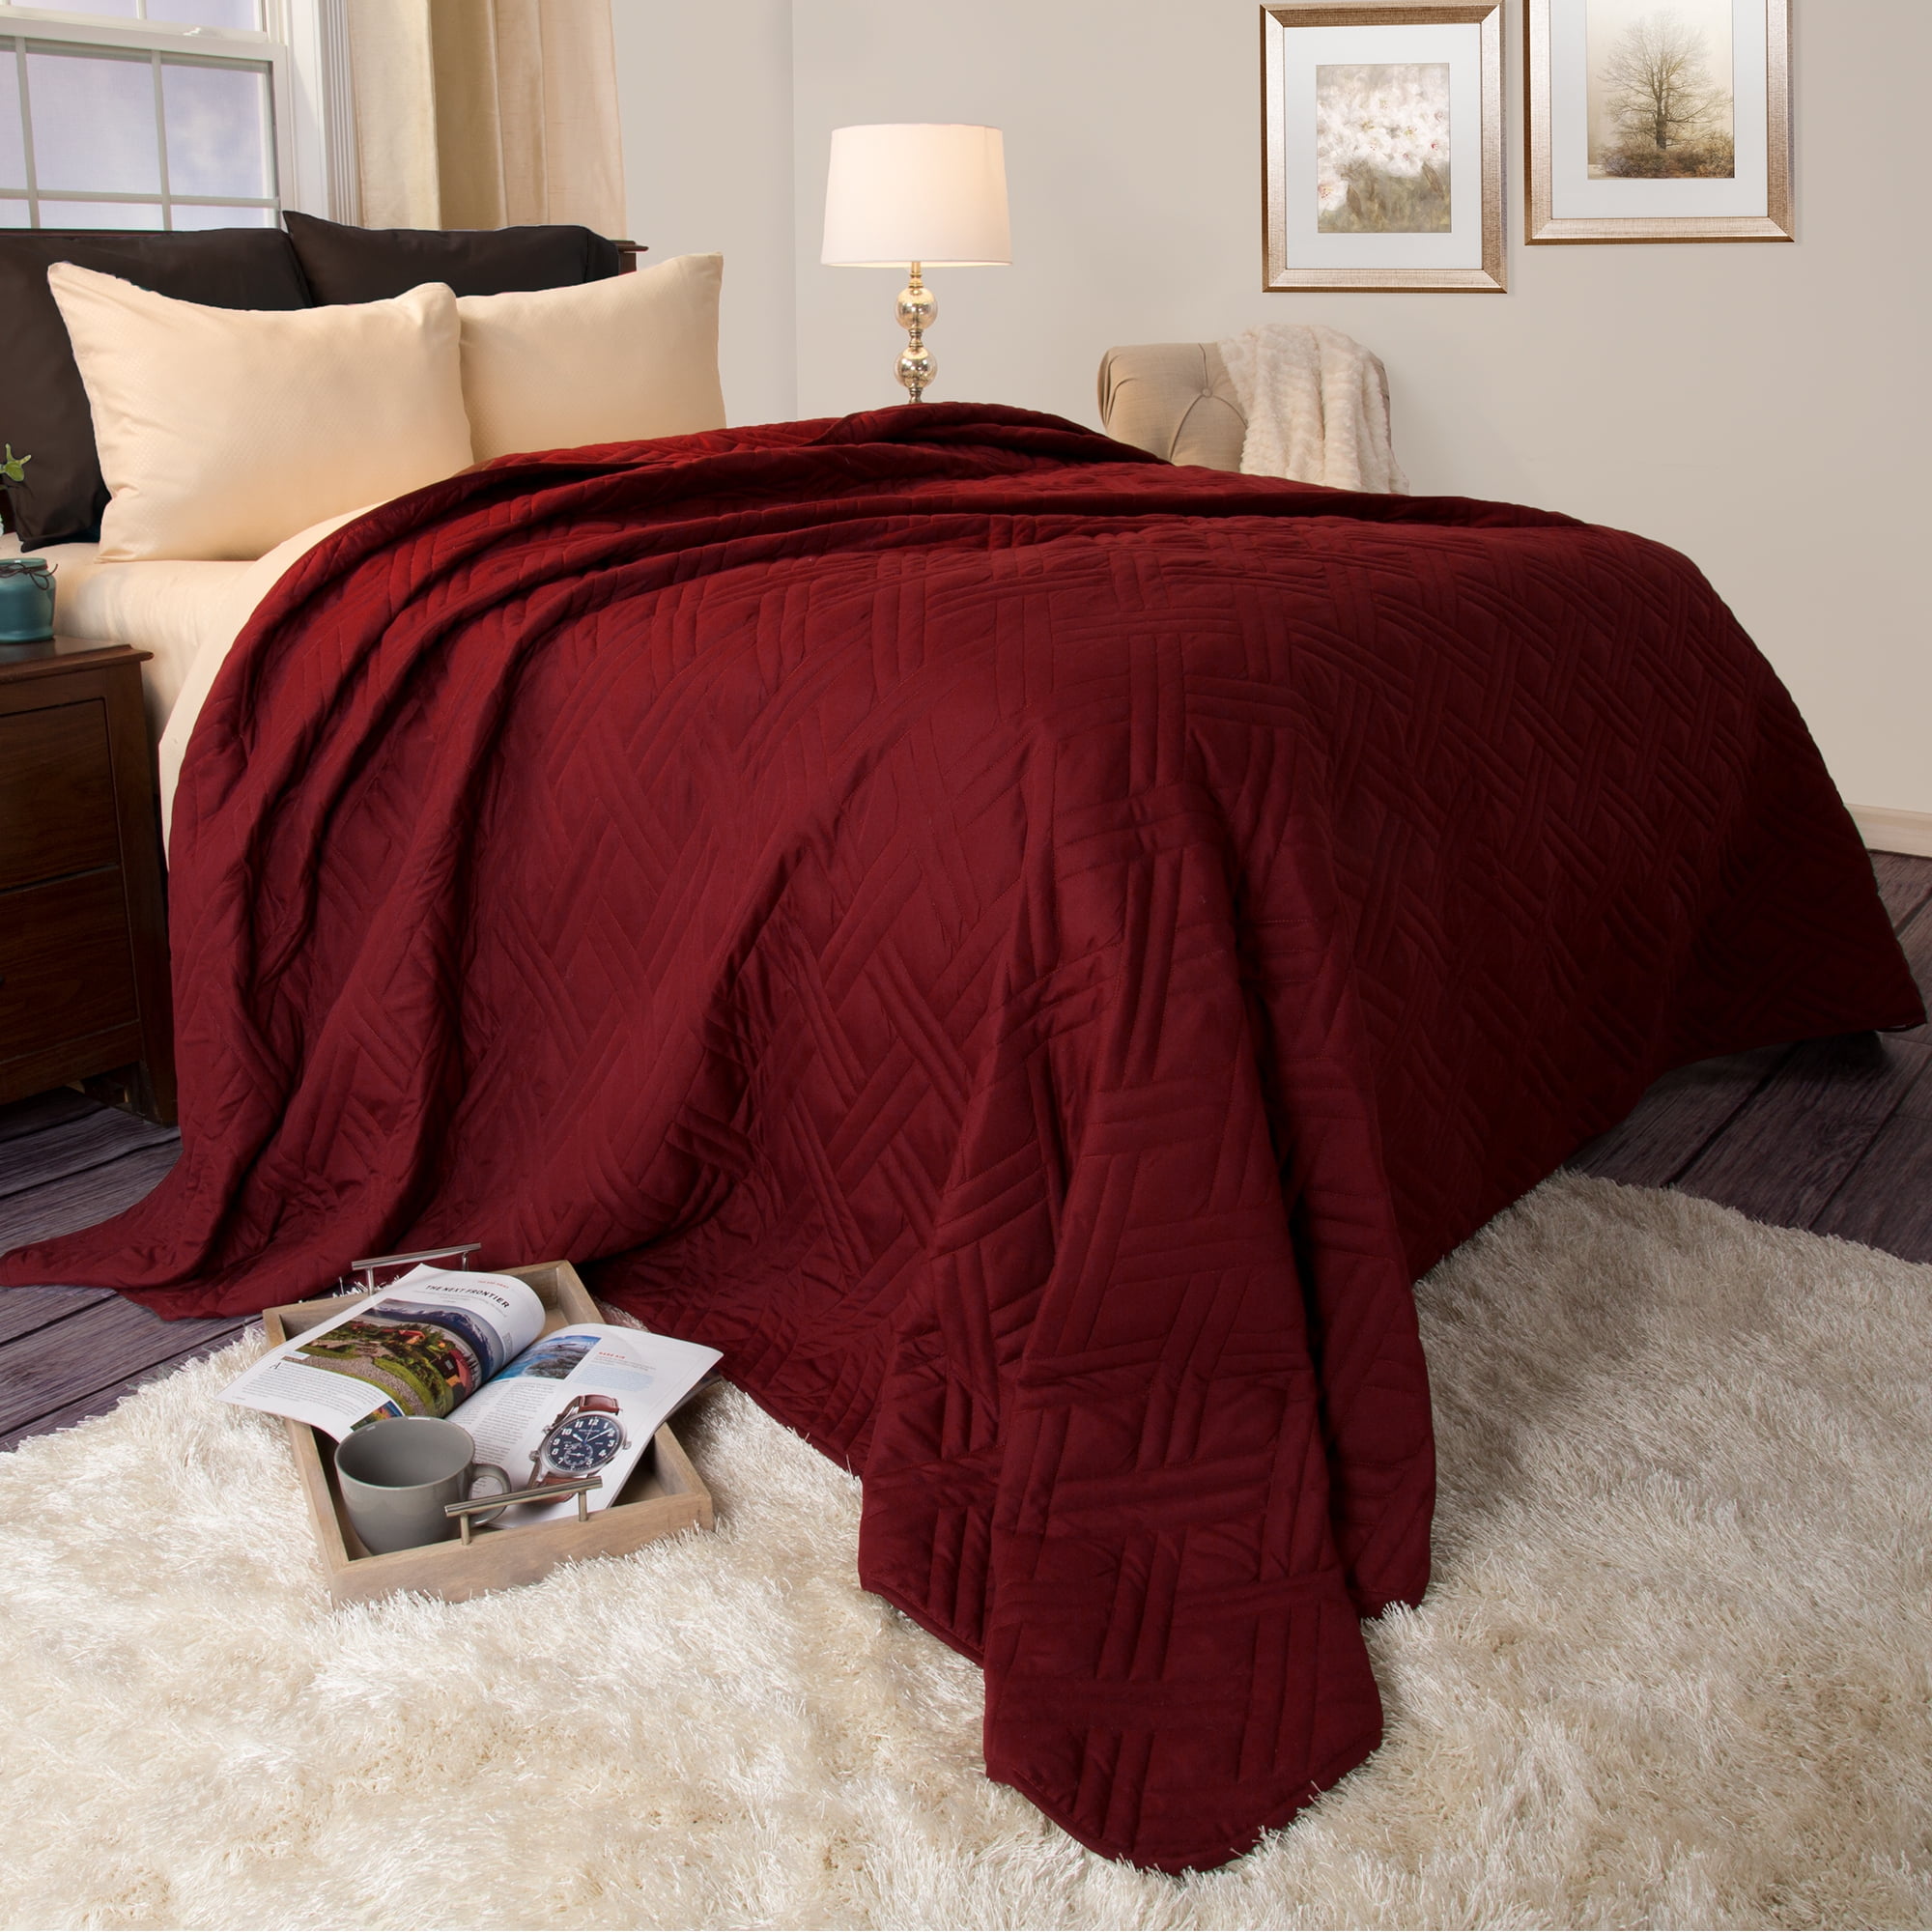 Details about   Glorious Bedding Sheet Set 4 PCs Deep Pocket Organic Cotton Cal King All Striped 